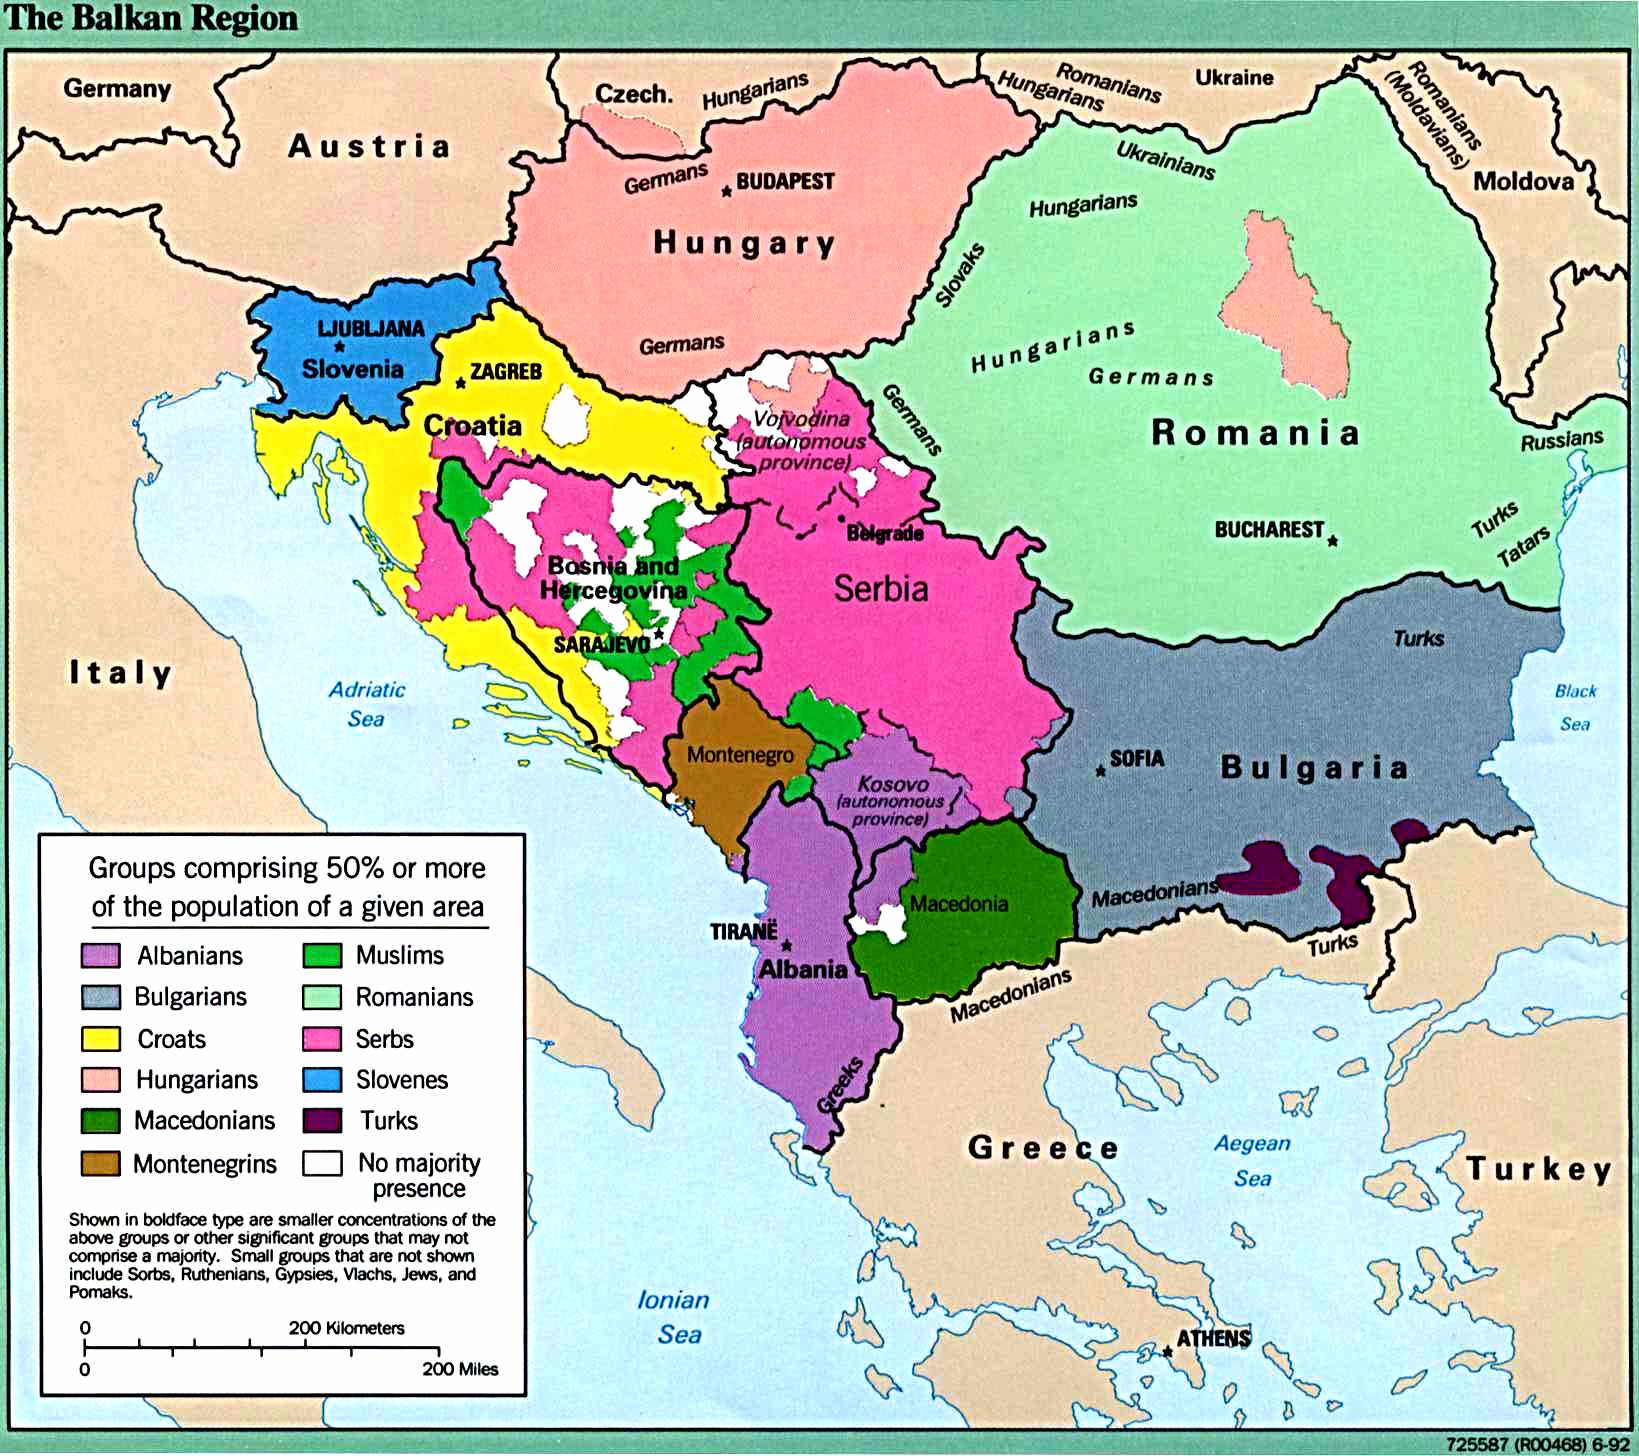 Balkans 